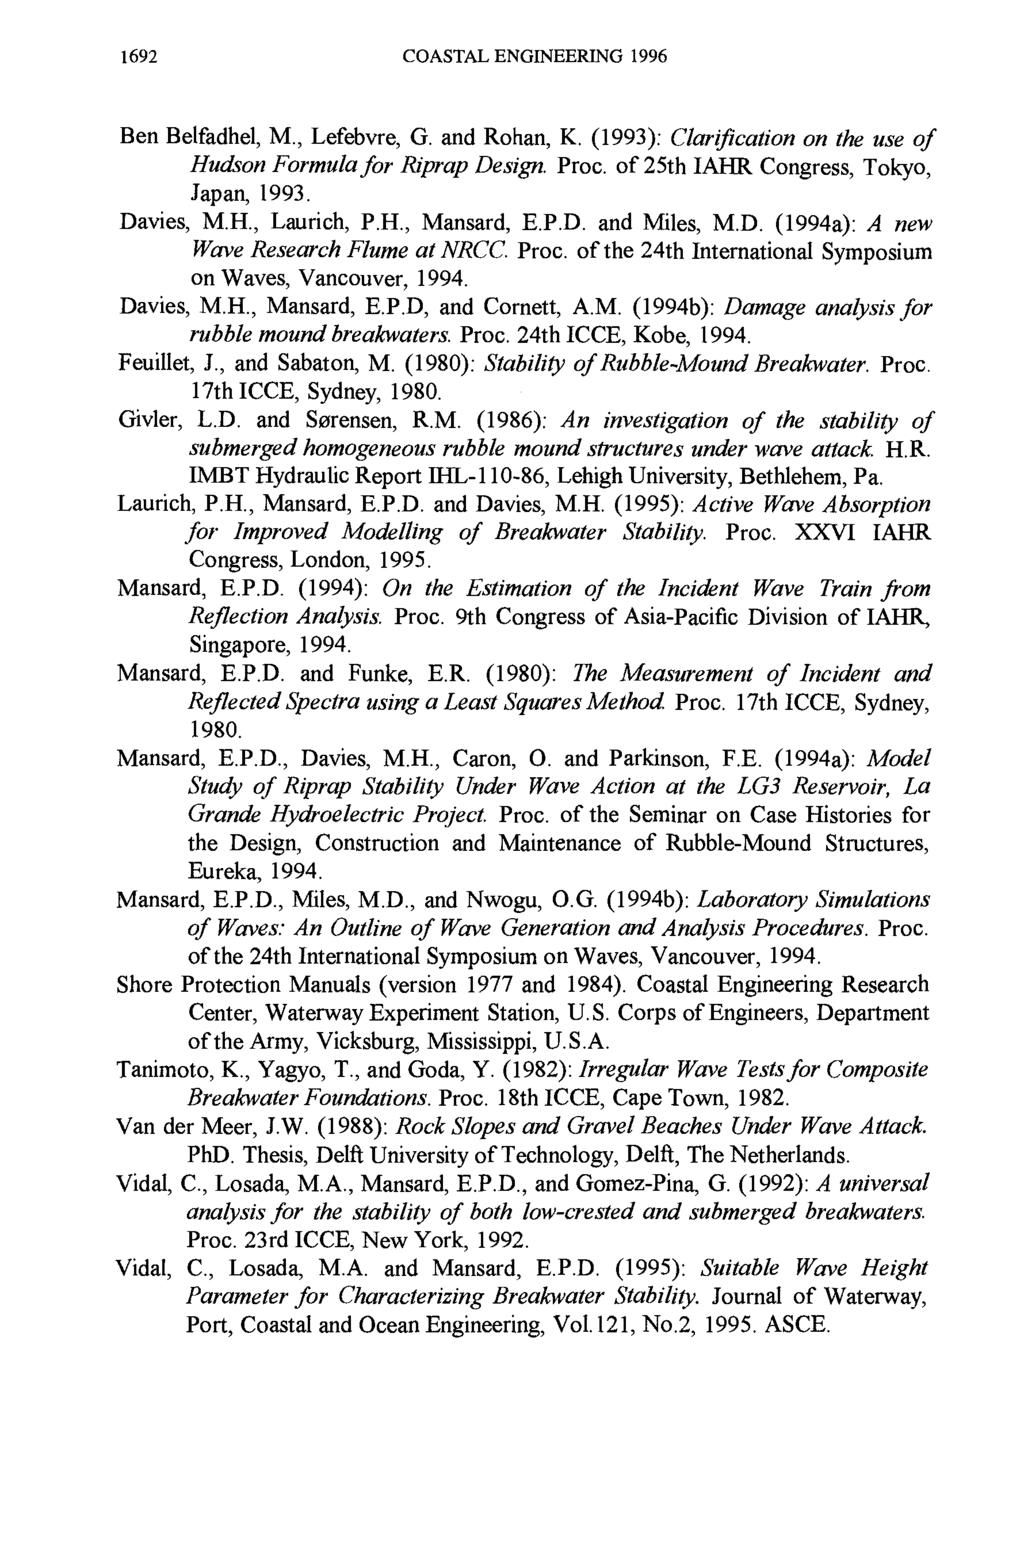 1692 COASTAL ENGINEERING 1996 Ben Belfadhel, M., Lefebvre, G. and Rohan, K. (1993): Clarification on the use of Hudson Formula for Riprap Design. Proc. of 25th IAHR Congress, Tokyo, Japan, 1993.